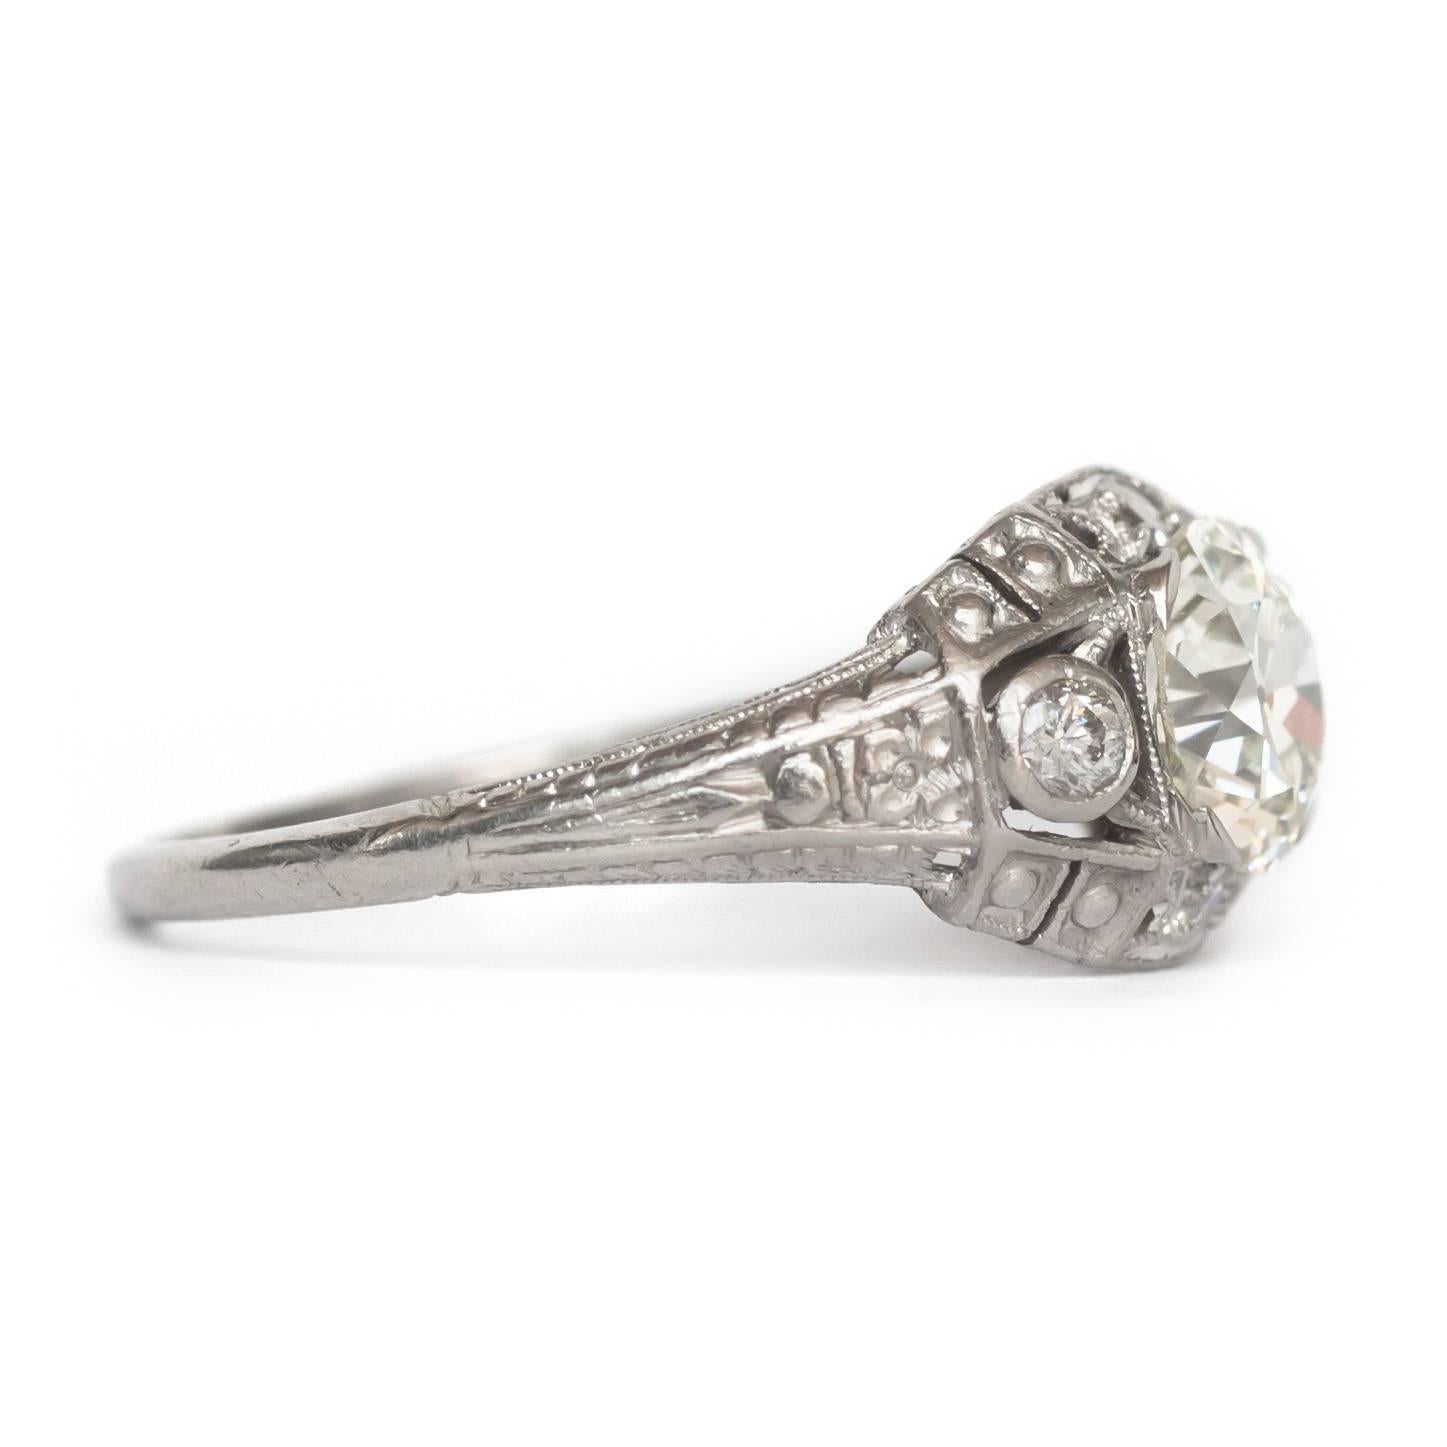 1920's Art Deco 1.05 Carat Old European Diamond  and Platinum Engagement Ring

Item Details: 
Ring Size: 6.5
Metal Type: Platinum
Weight: 3.2 grams

Center Diamond Details
Shape: Old European Brilliant
Carat Weight: 1.05 carat
Color: J
Clarity: